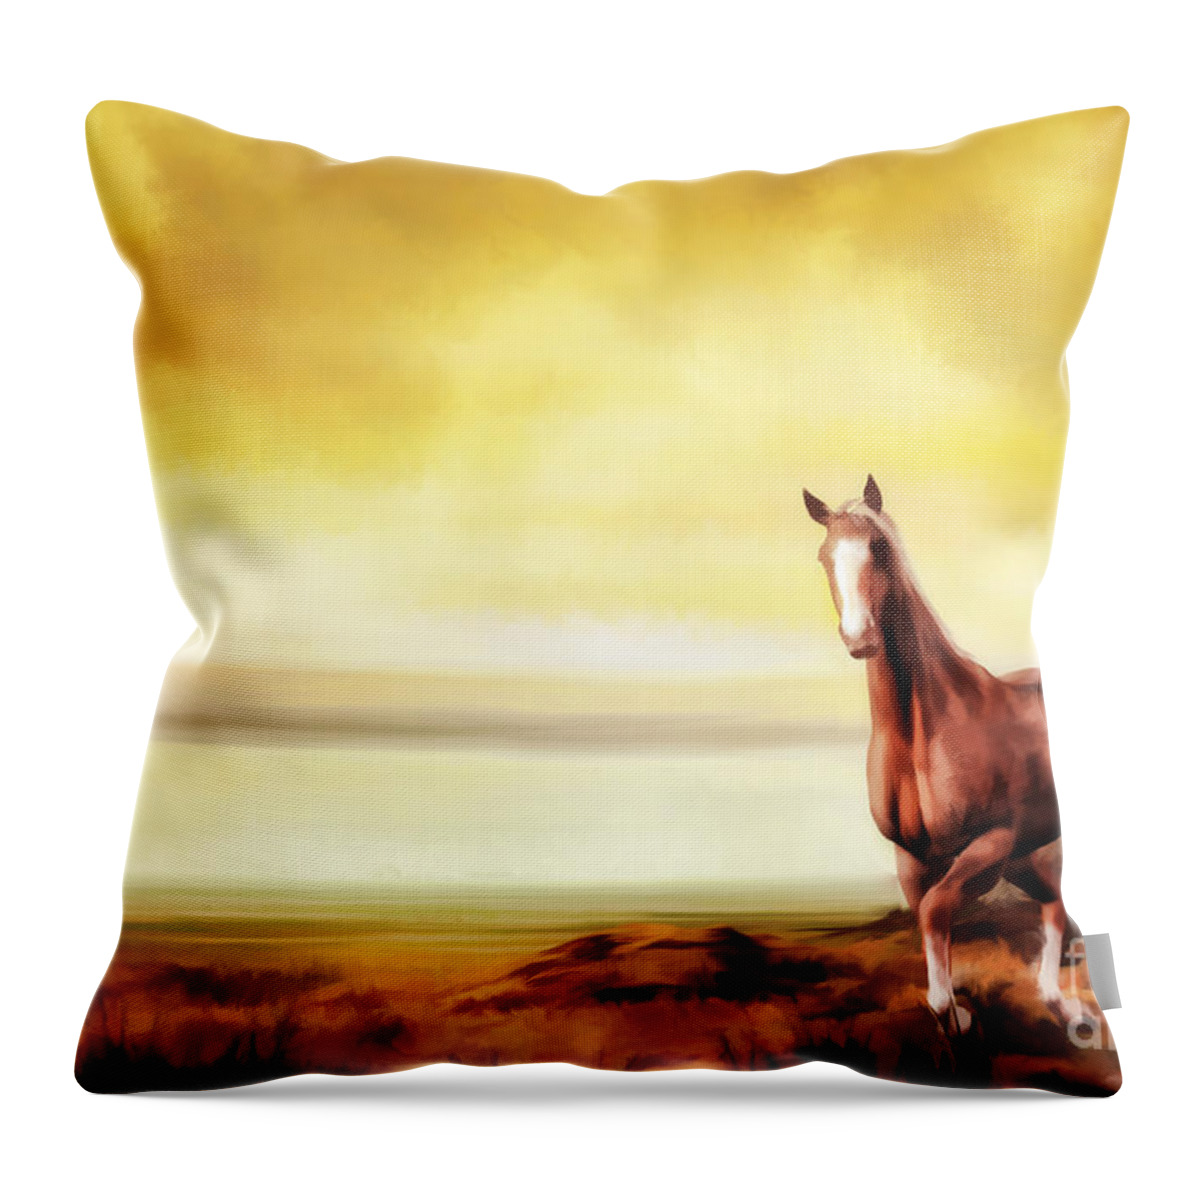 Horse Throw Pillow featuring the digital art Liberty by John Edwards